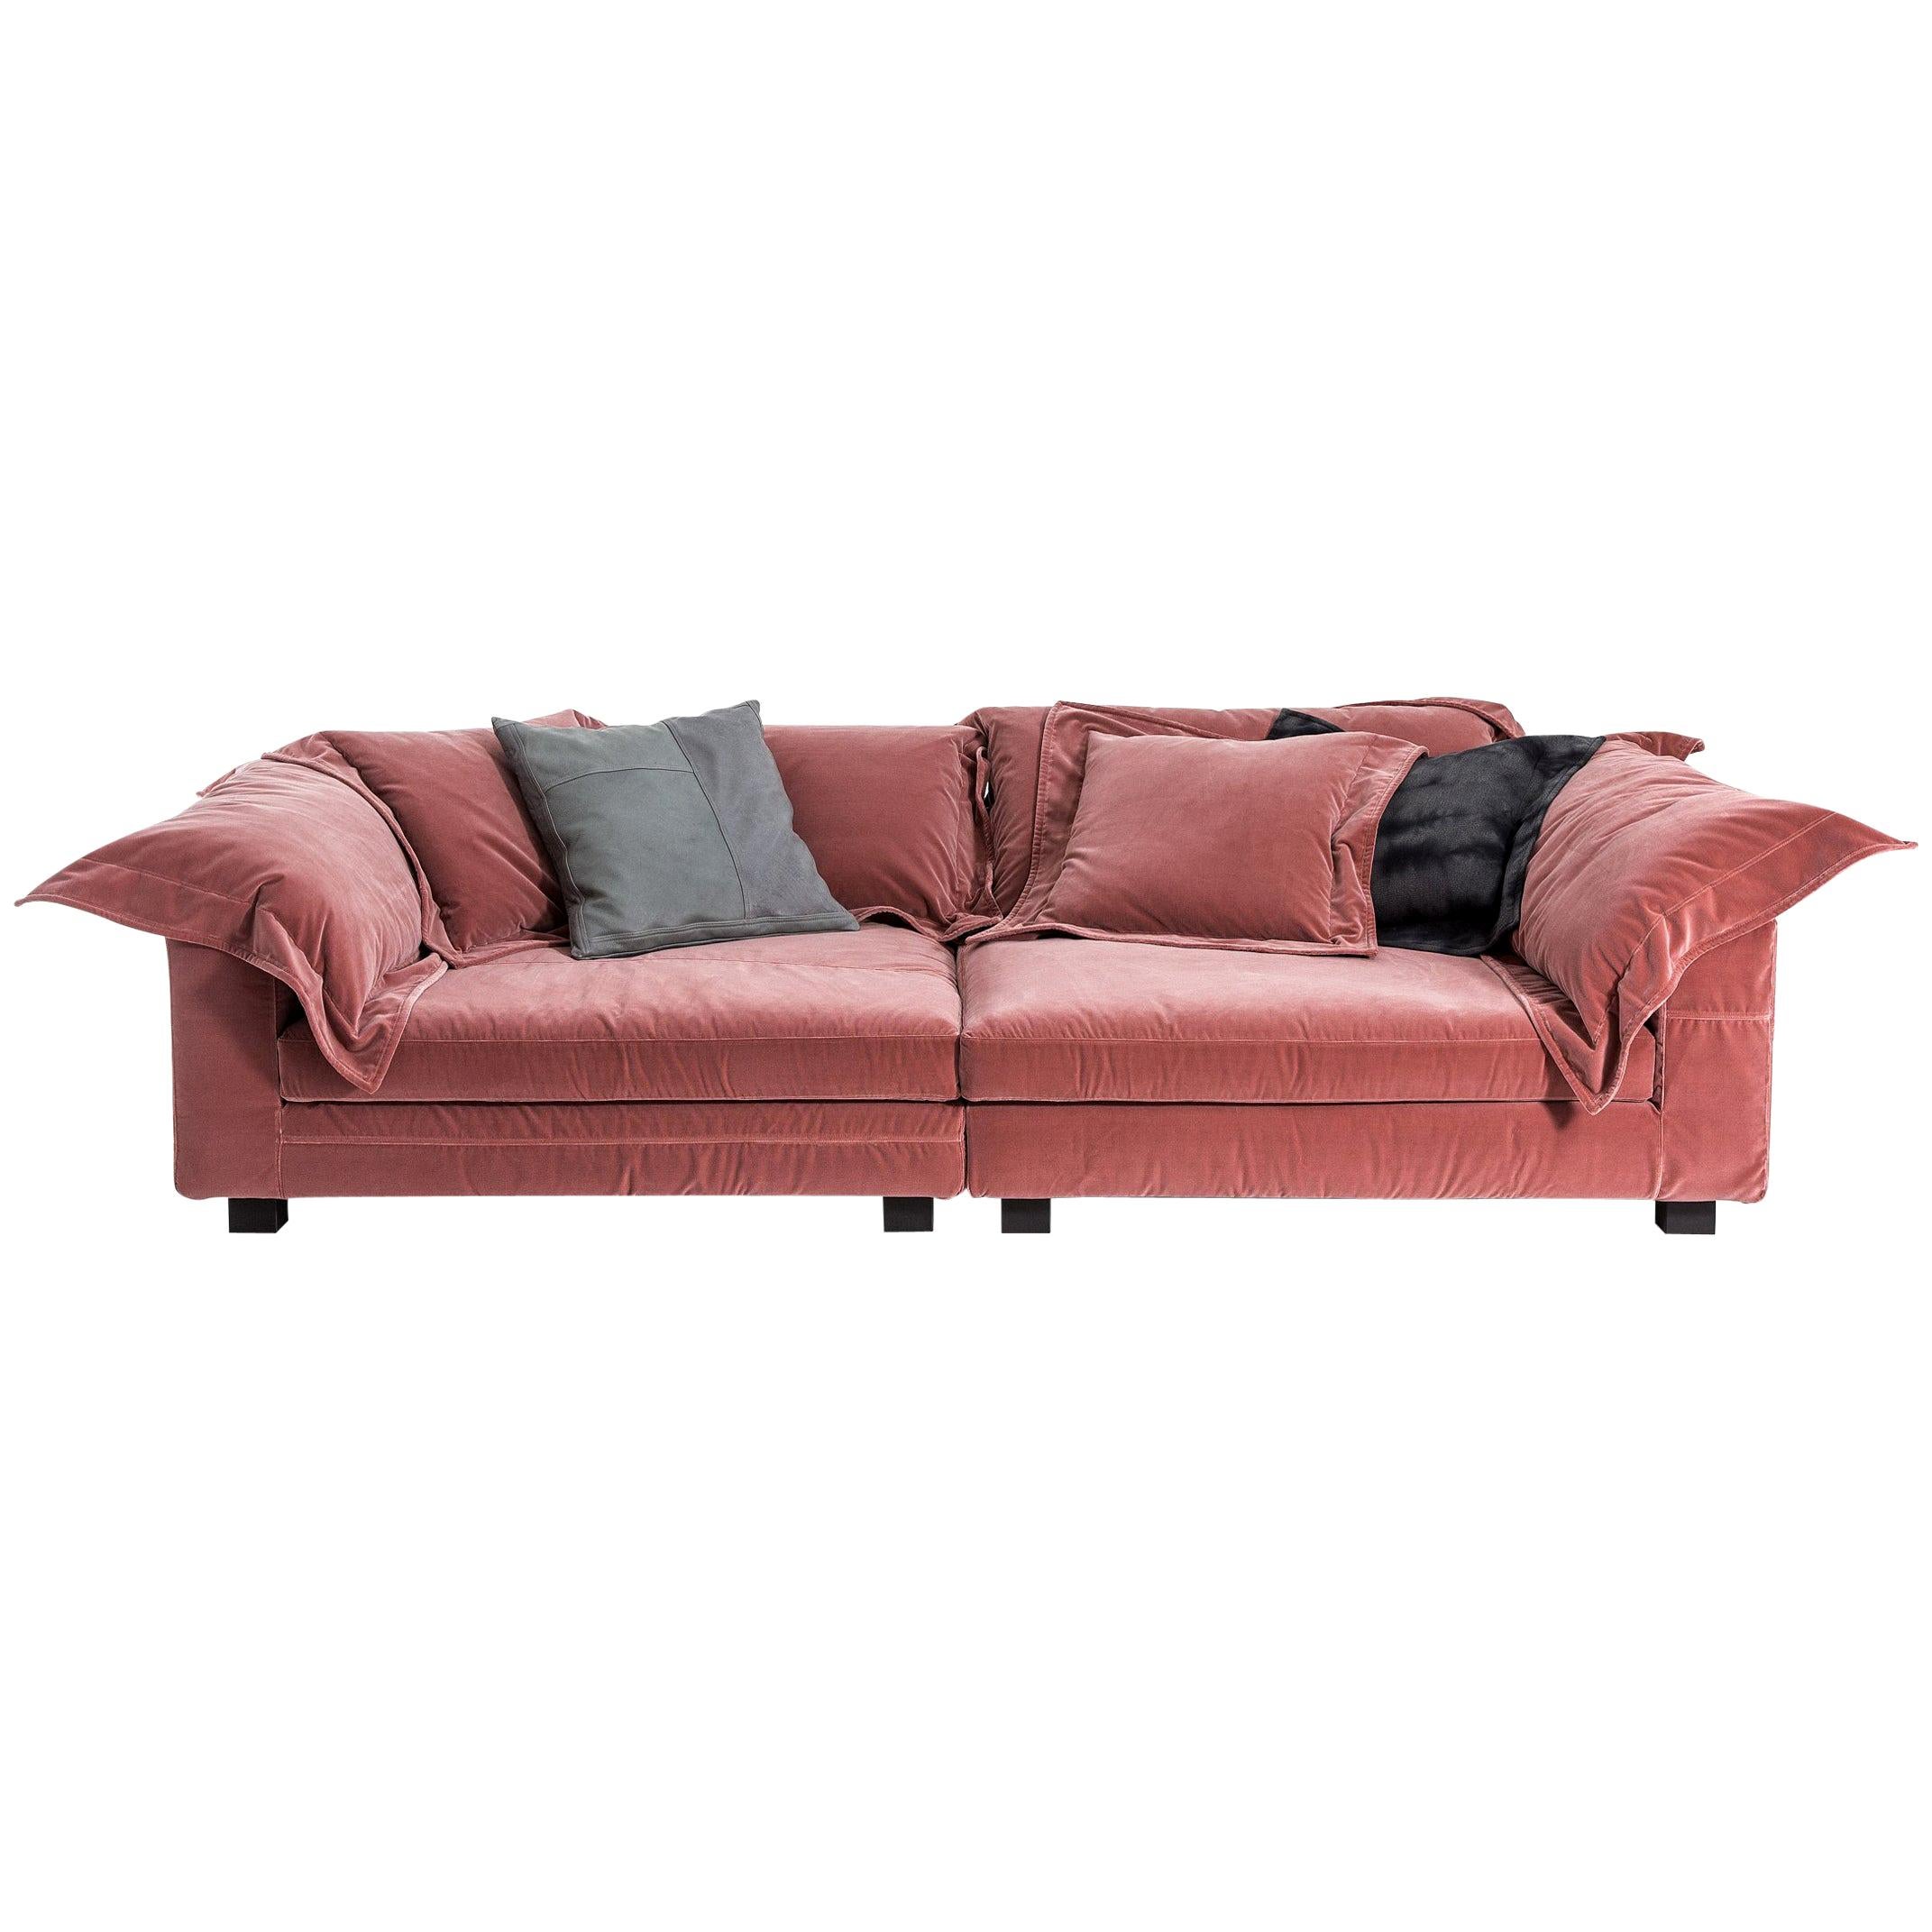 "Nebula Nine" Cotton Linen Leather and Velvet Covered Sofa by Moroso & Diesel For Sale